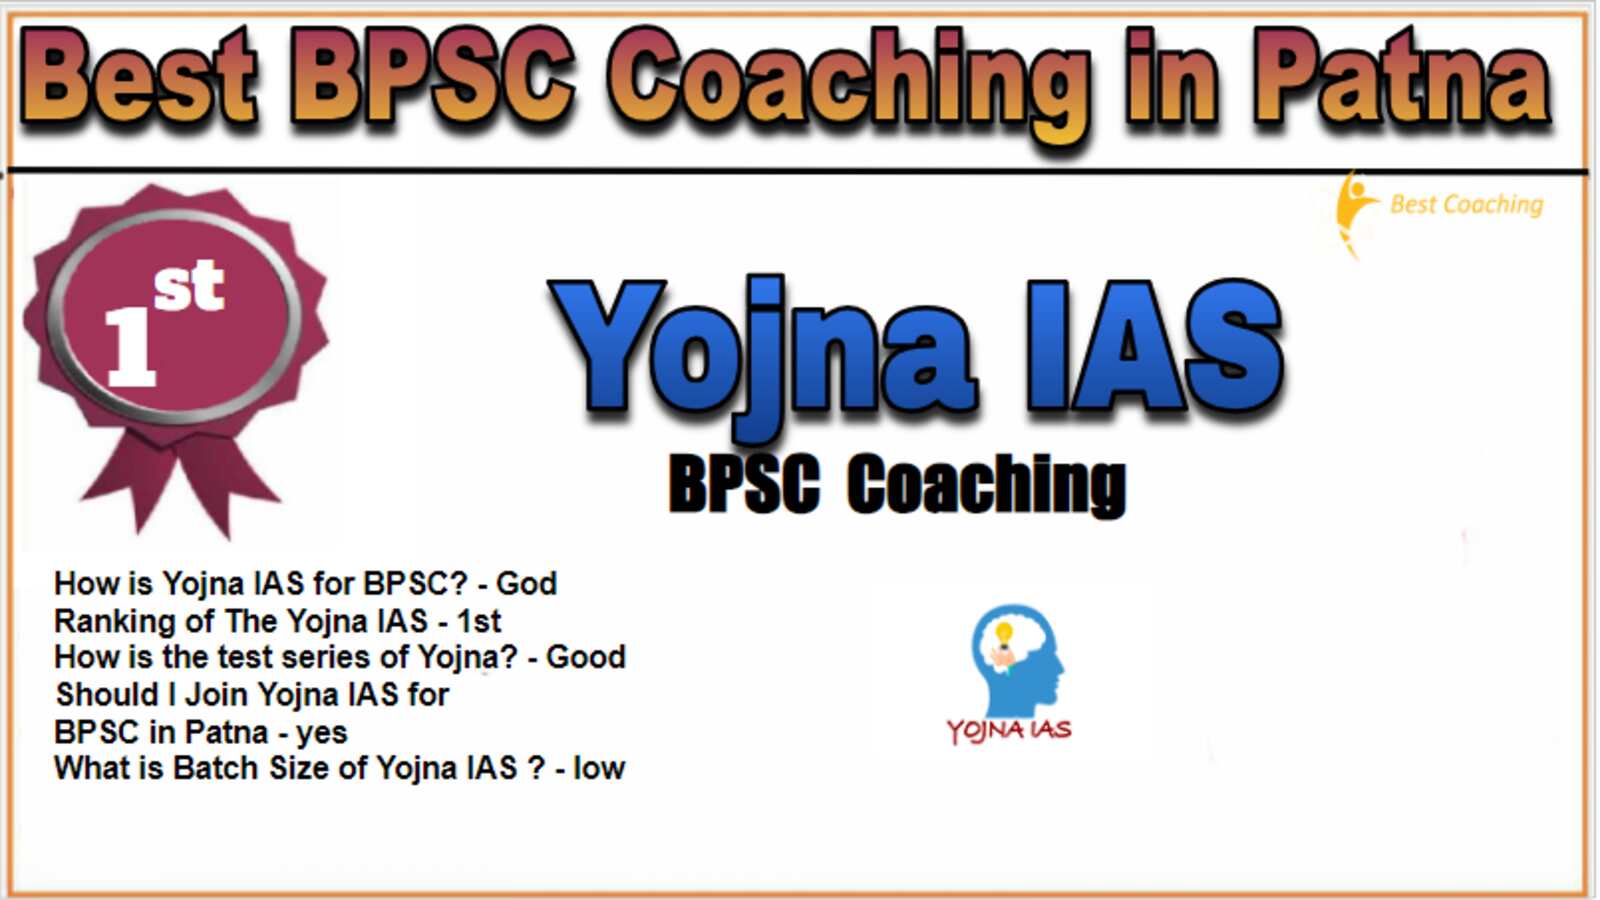 Rank 1 Best BPSC Coaching in Patna